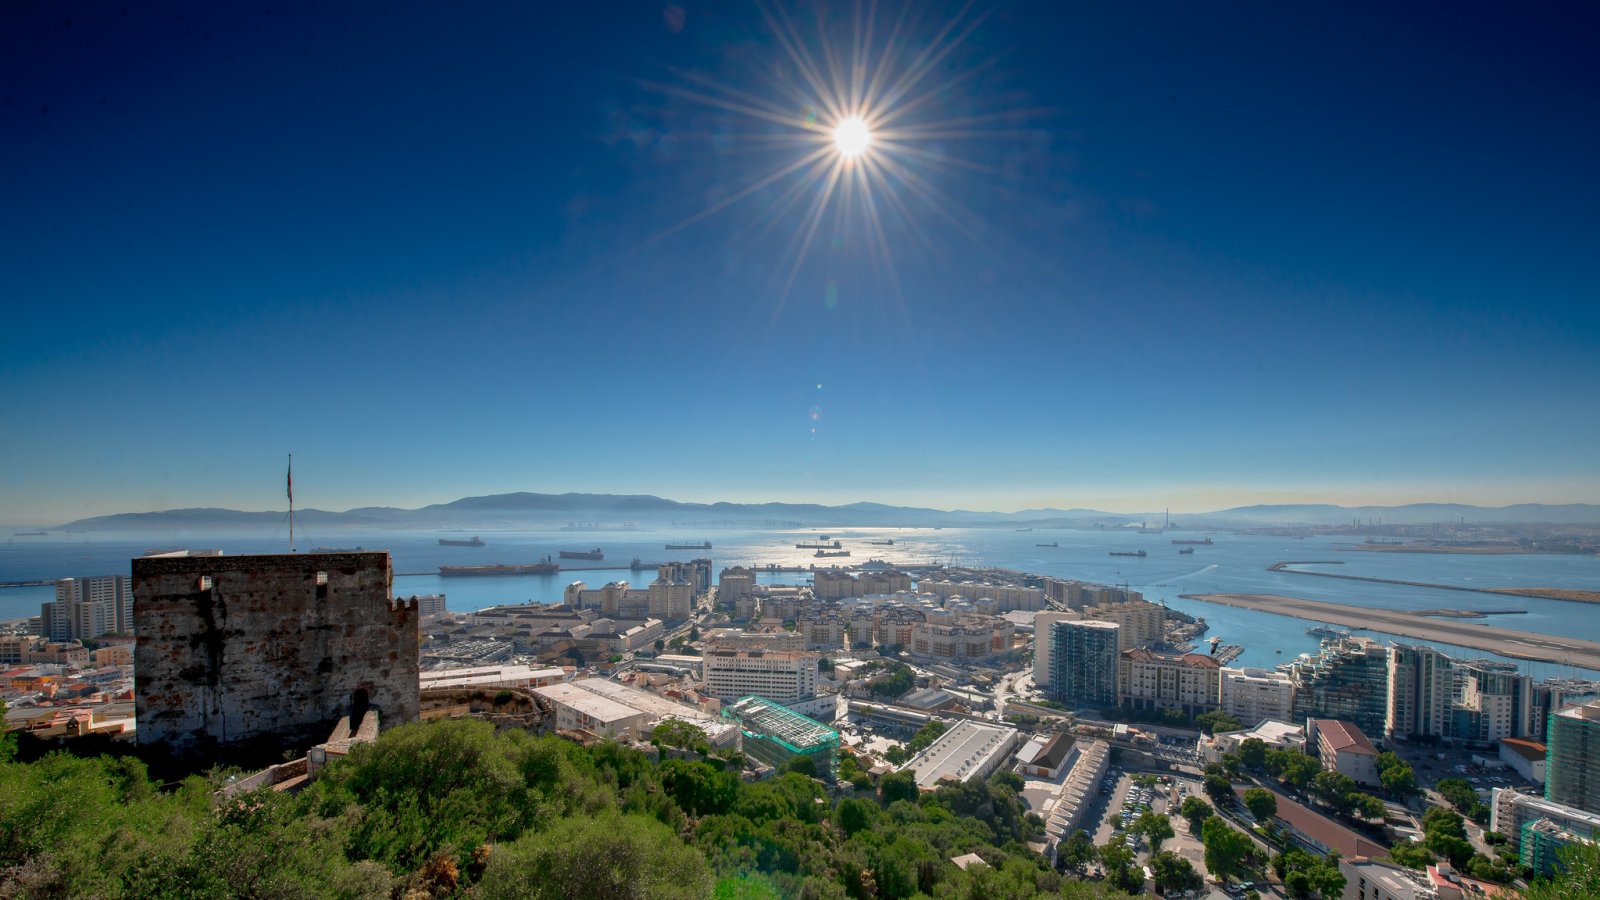 About Gibraltar